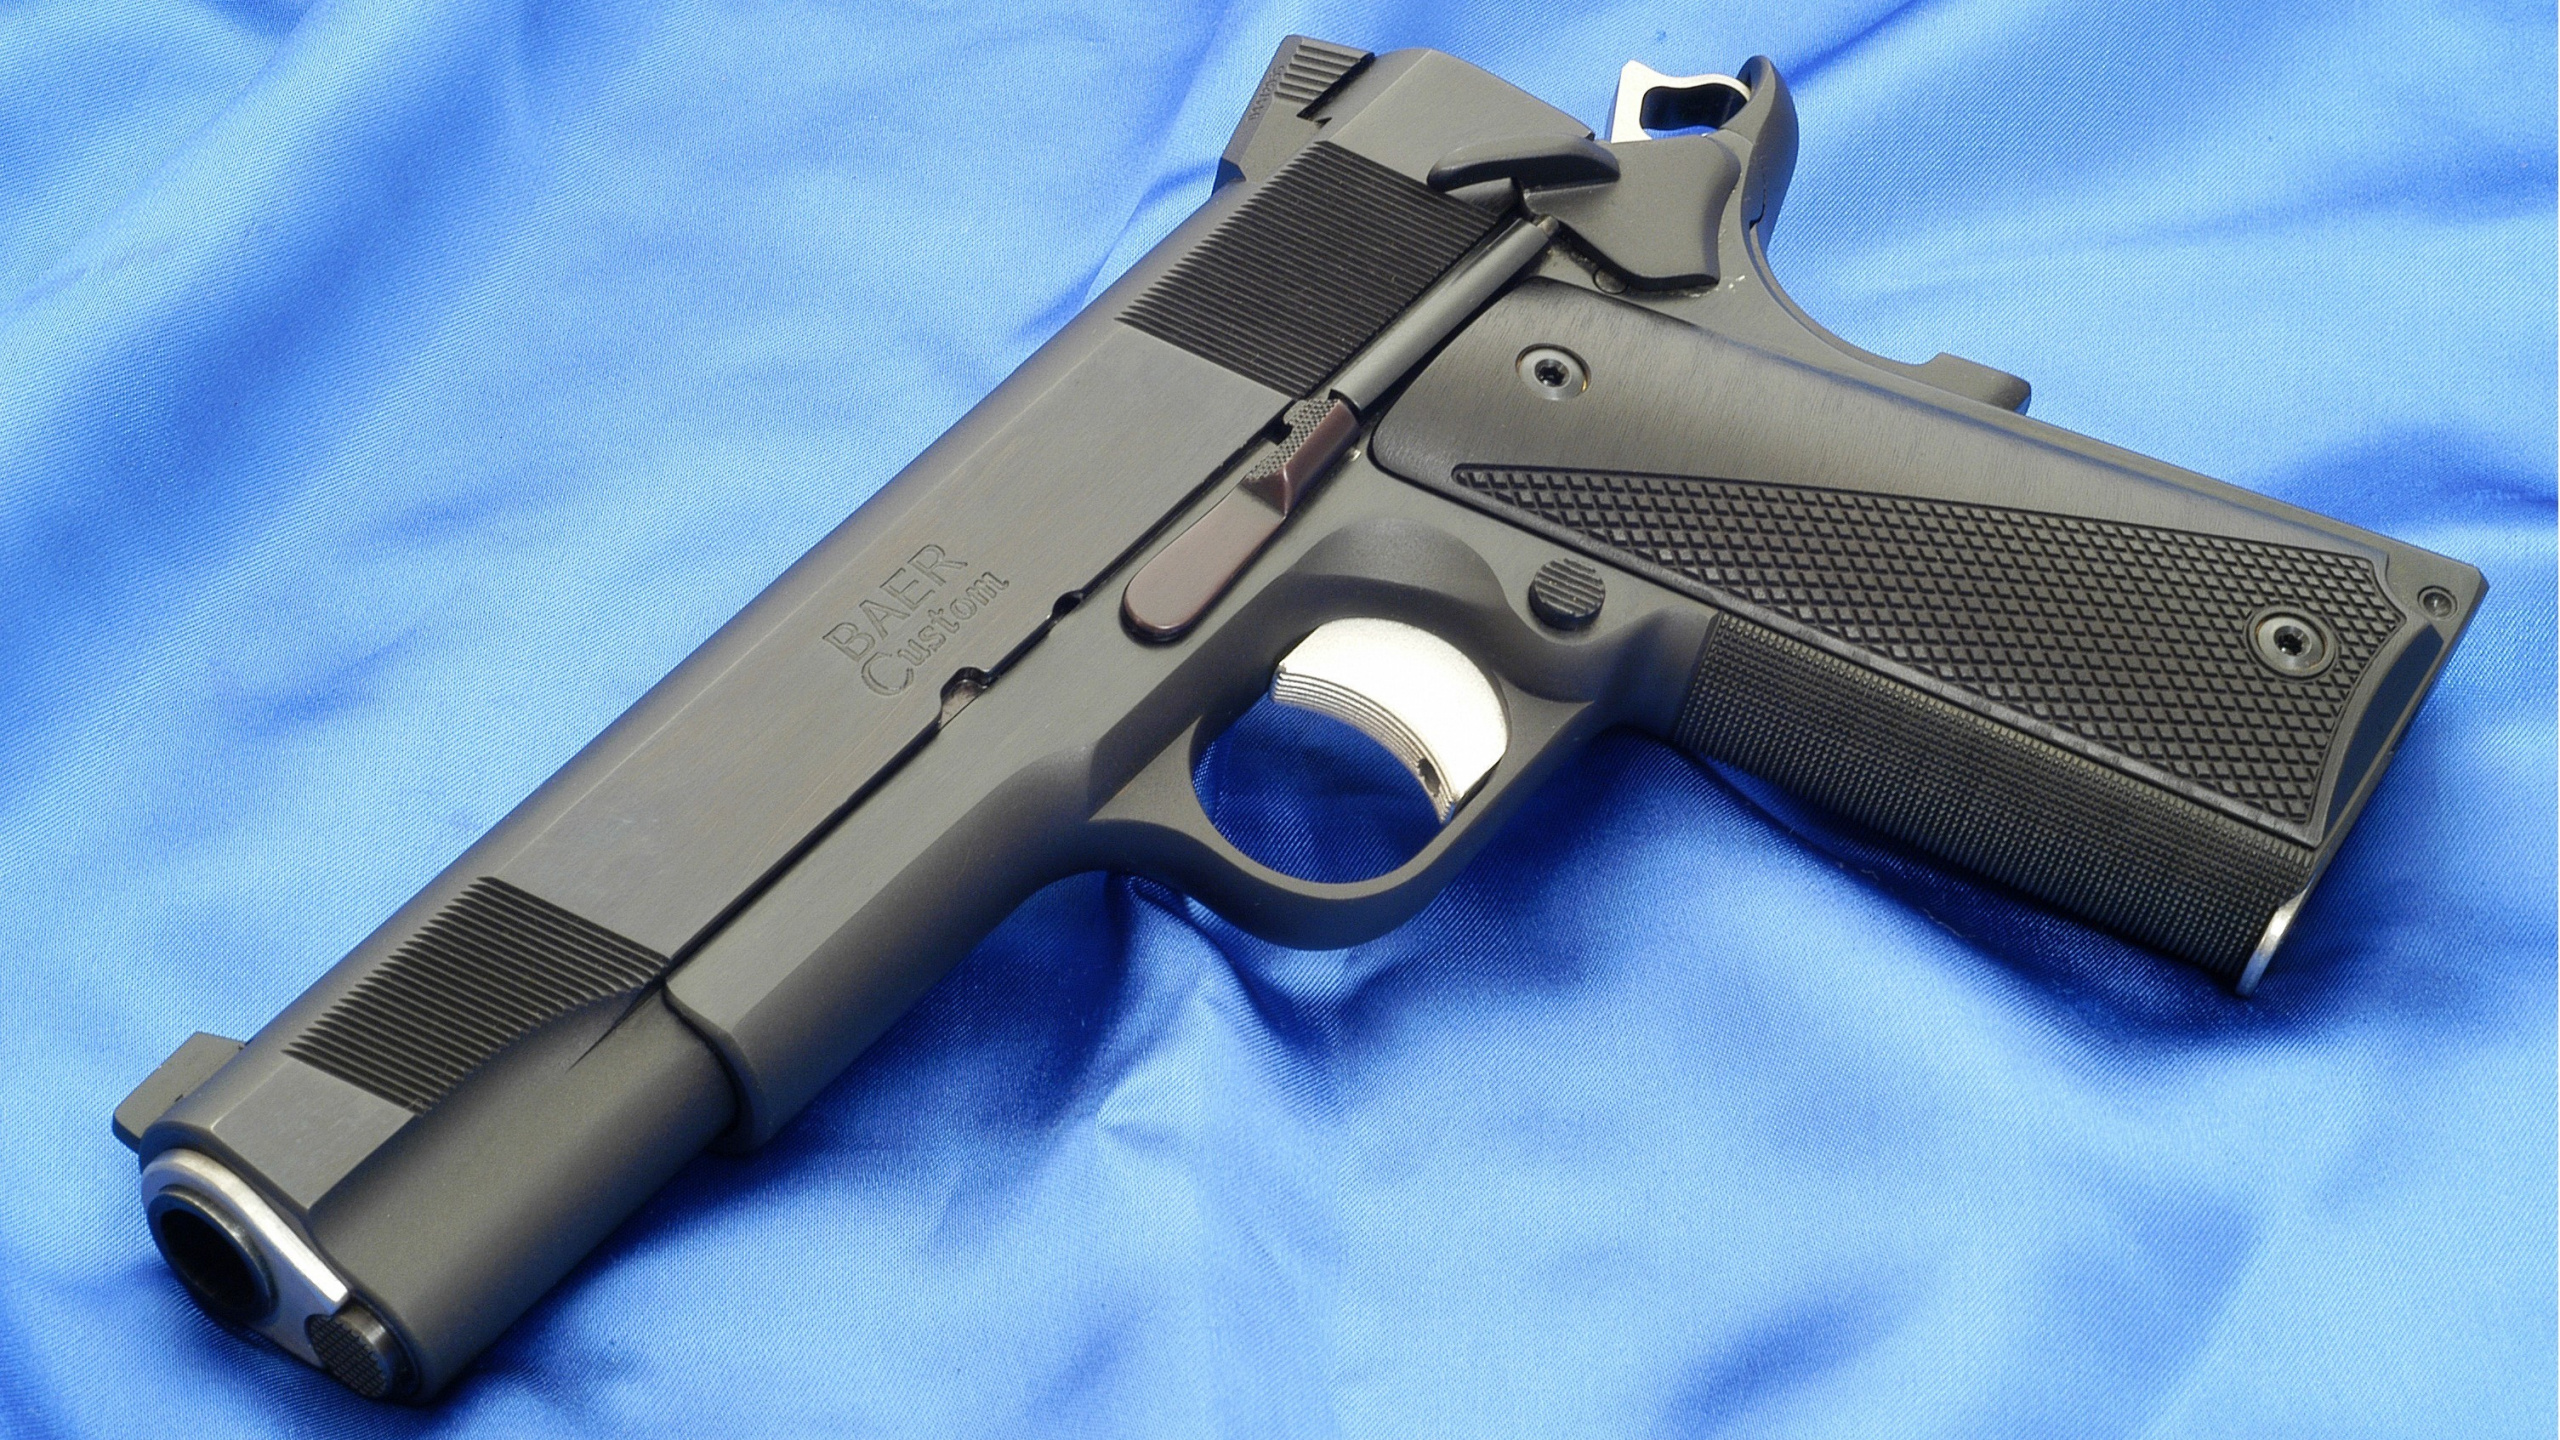 M1911 Pistole, Magazin, Handfeuerwaffe, Feuerwaffe, Trigger. Wallpaper in 2560x1440 Resolution